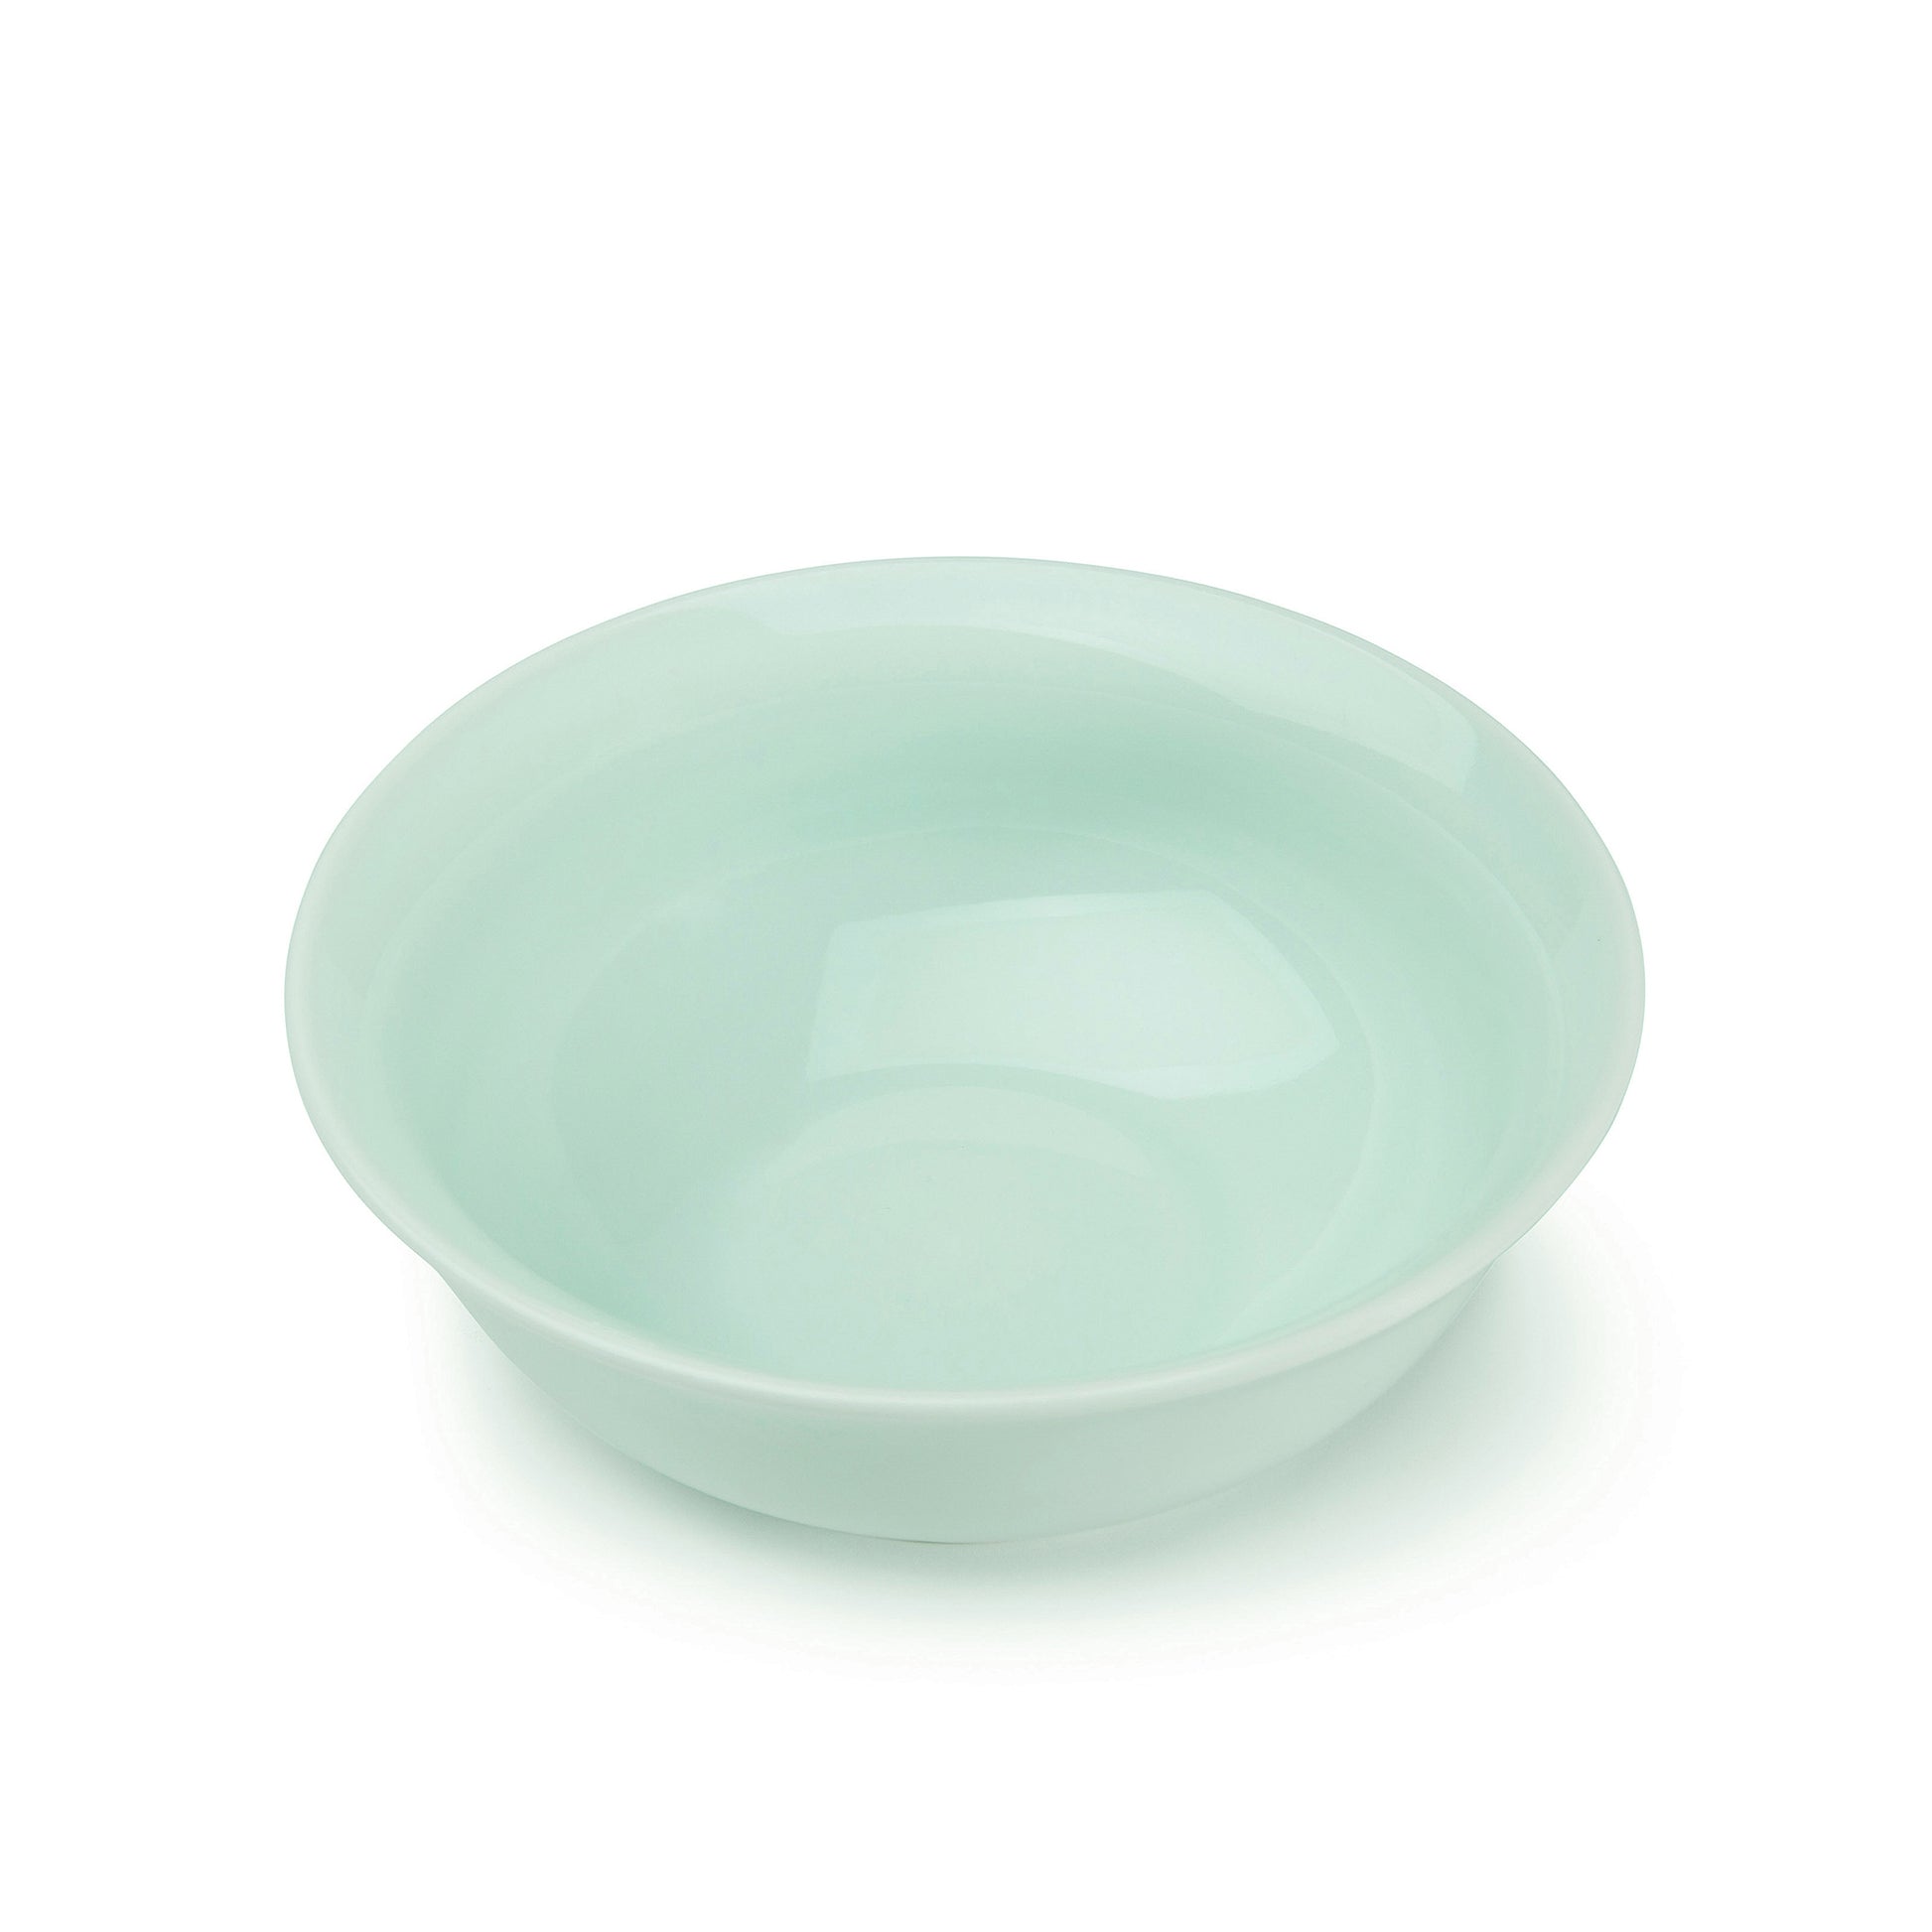 9" green celadon porcelain Zhengde bowl, Asian noodle bowl, serving bowl, 45 degree angle view, media 5 of 5